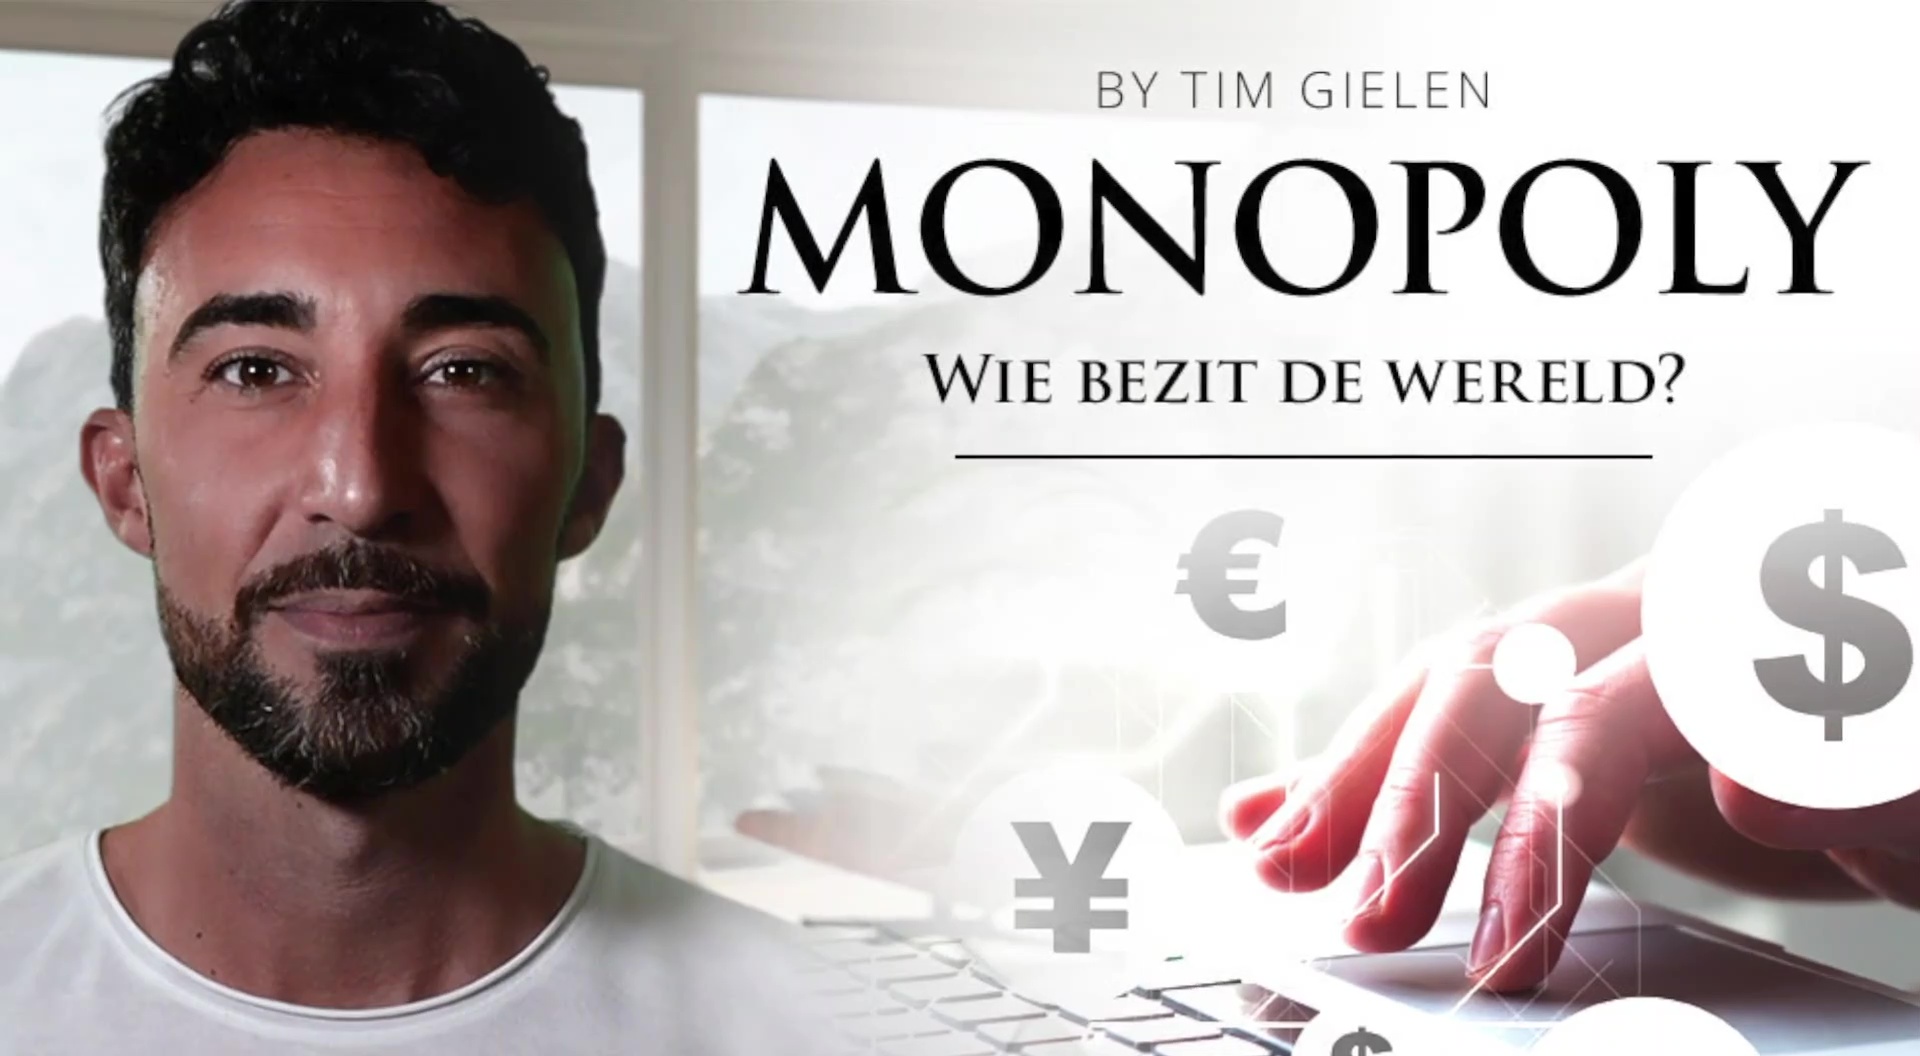 Tim Gielen - Monopoly